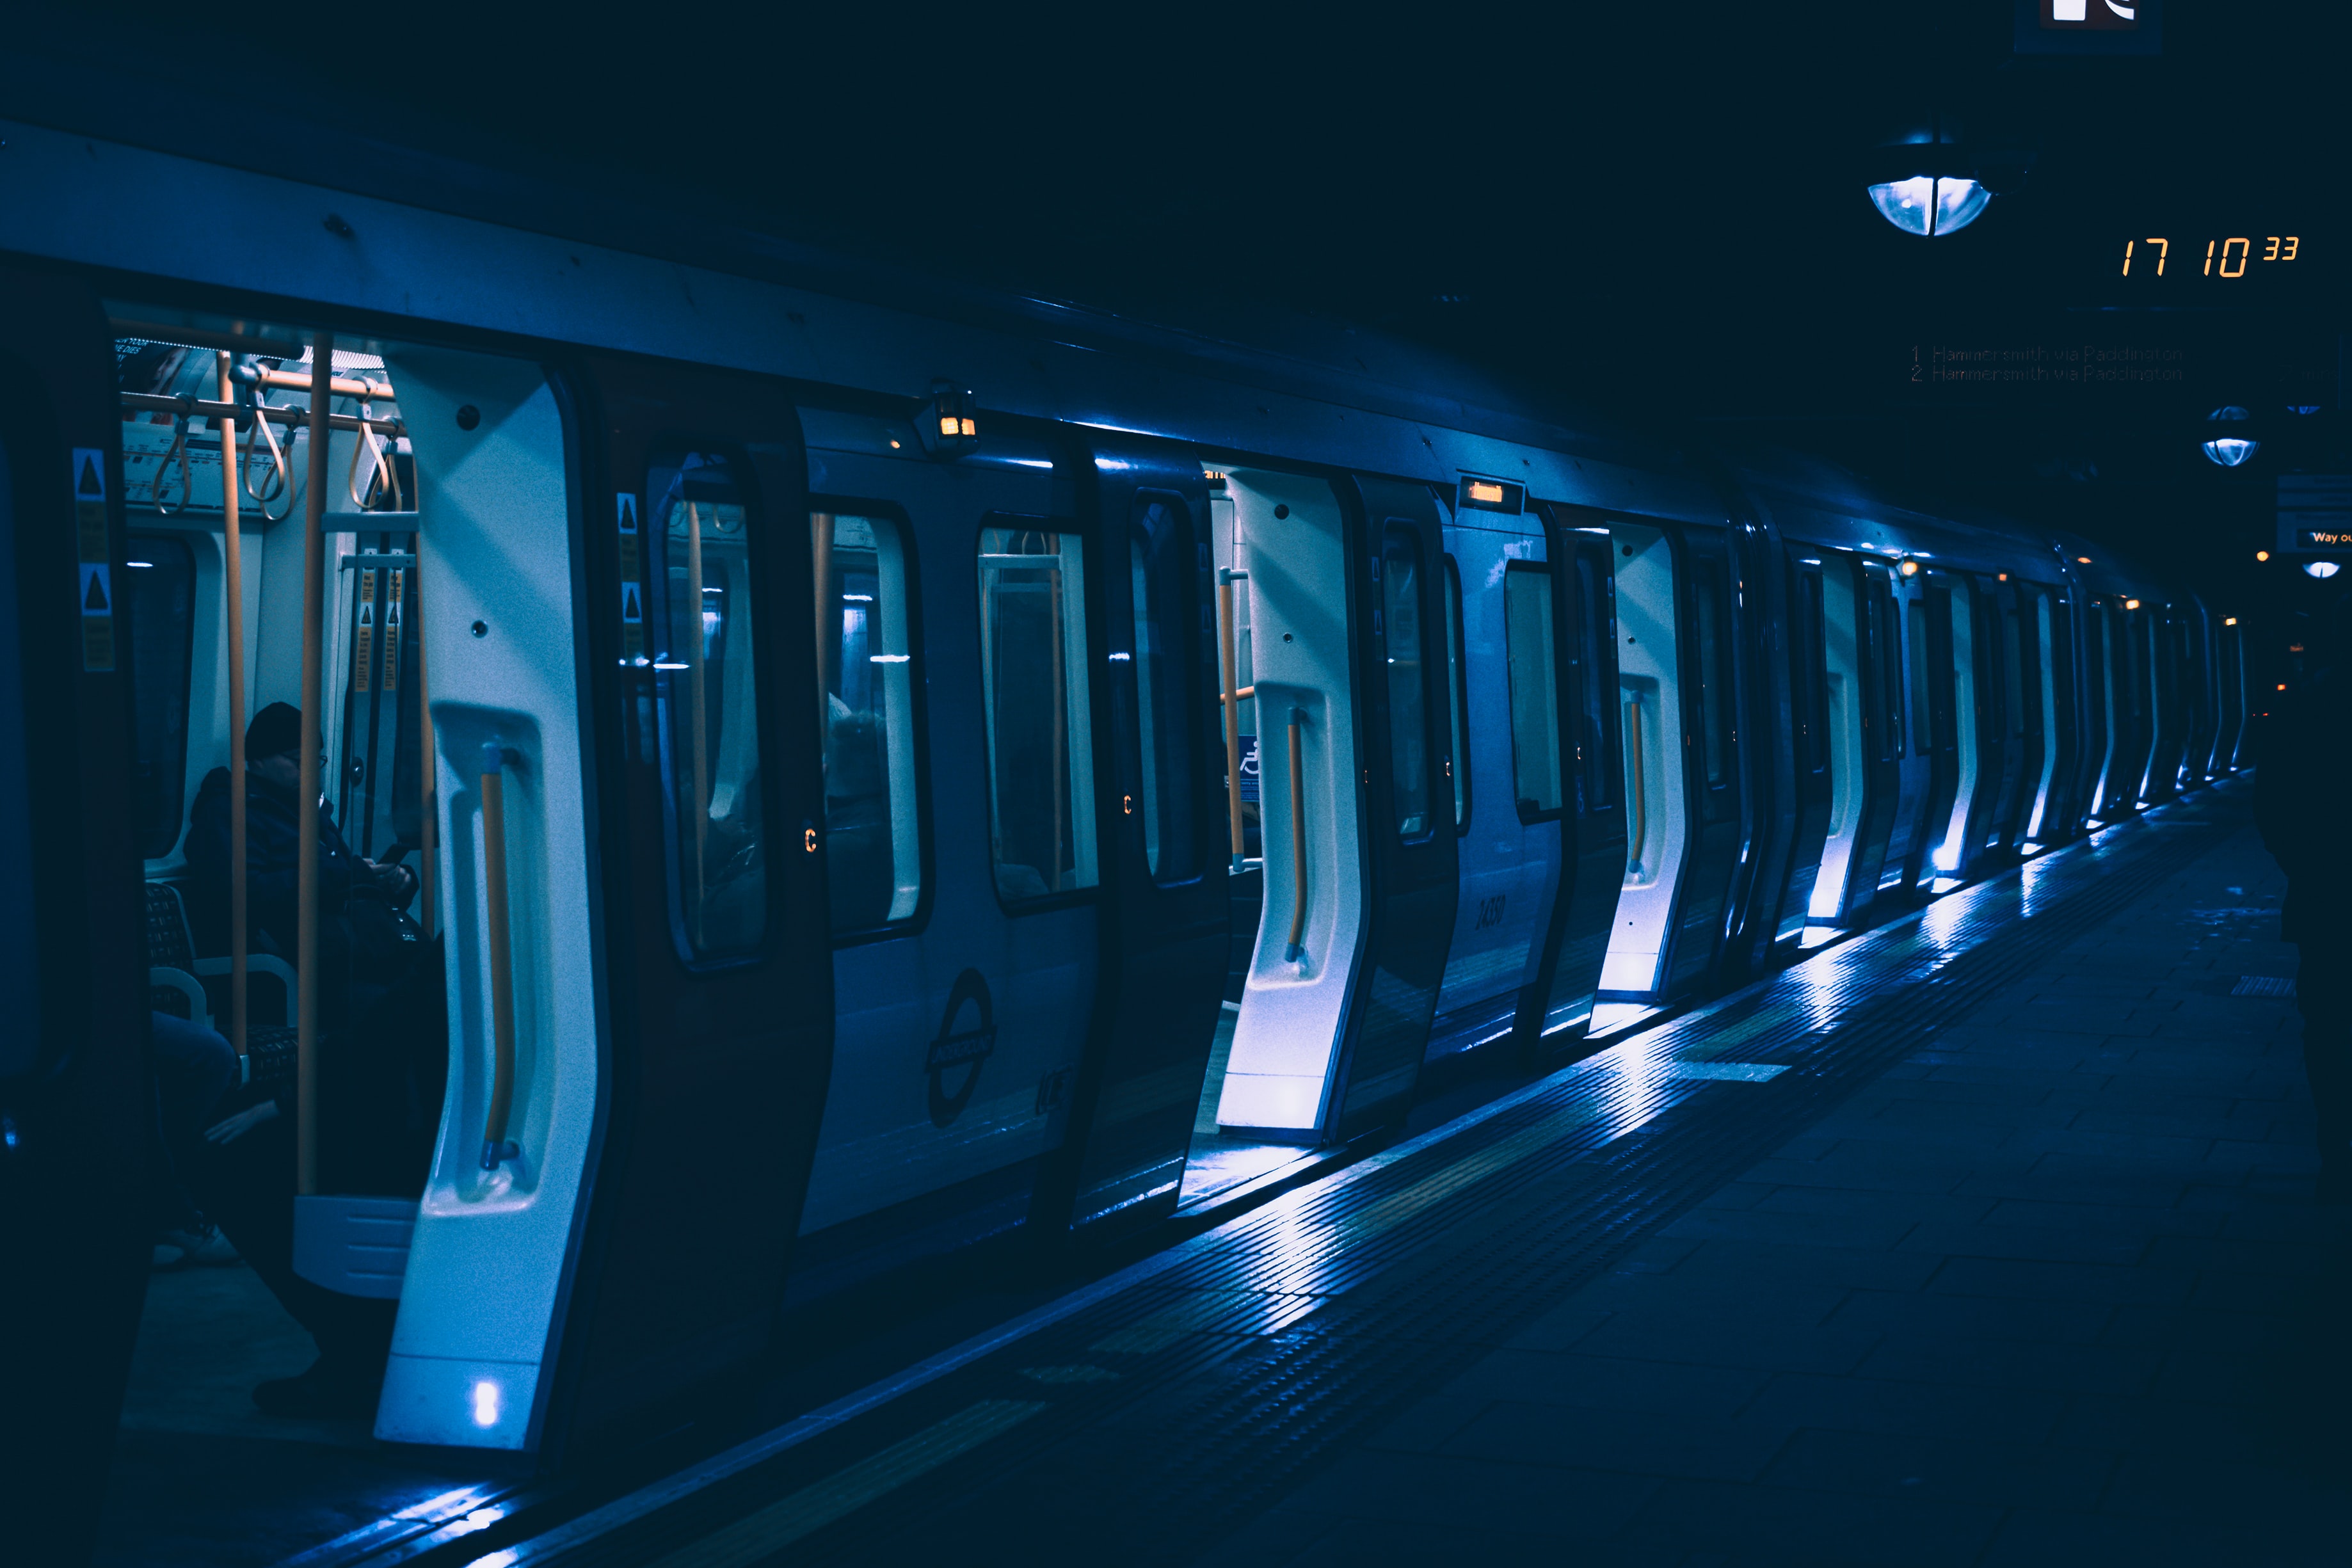 Dark blue aesthetic train